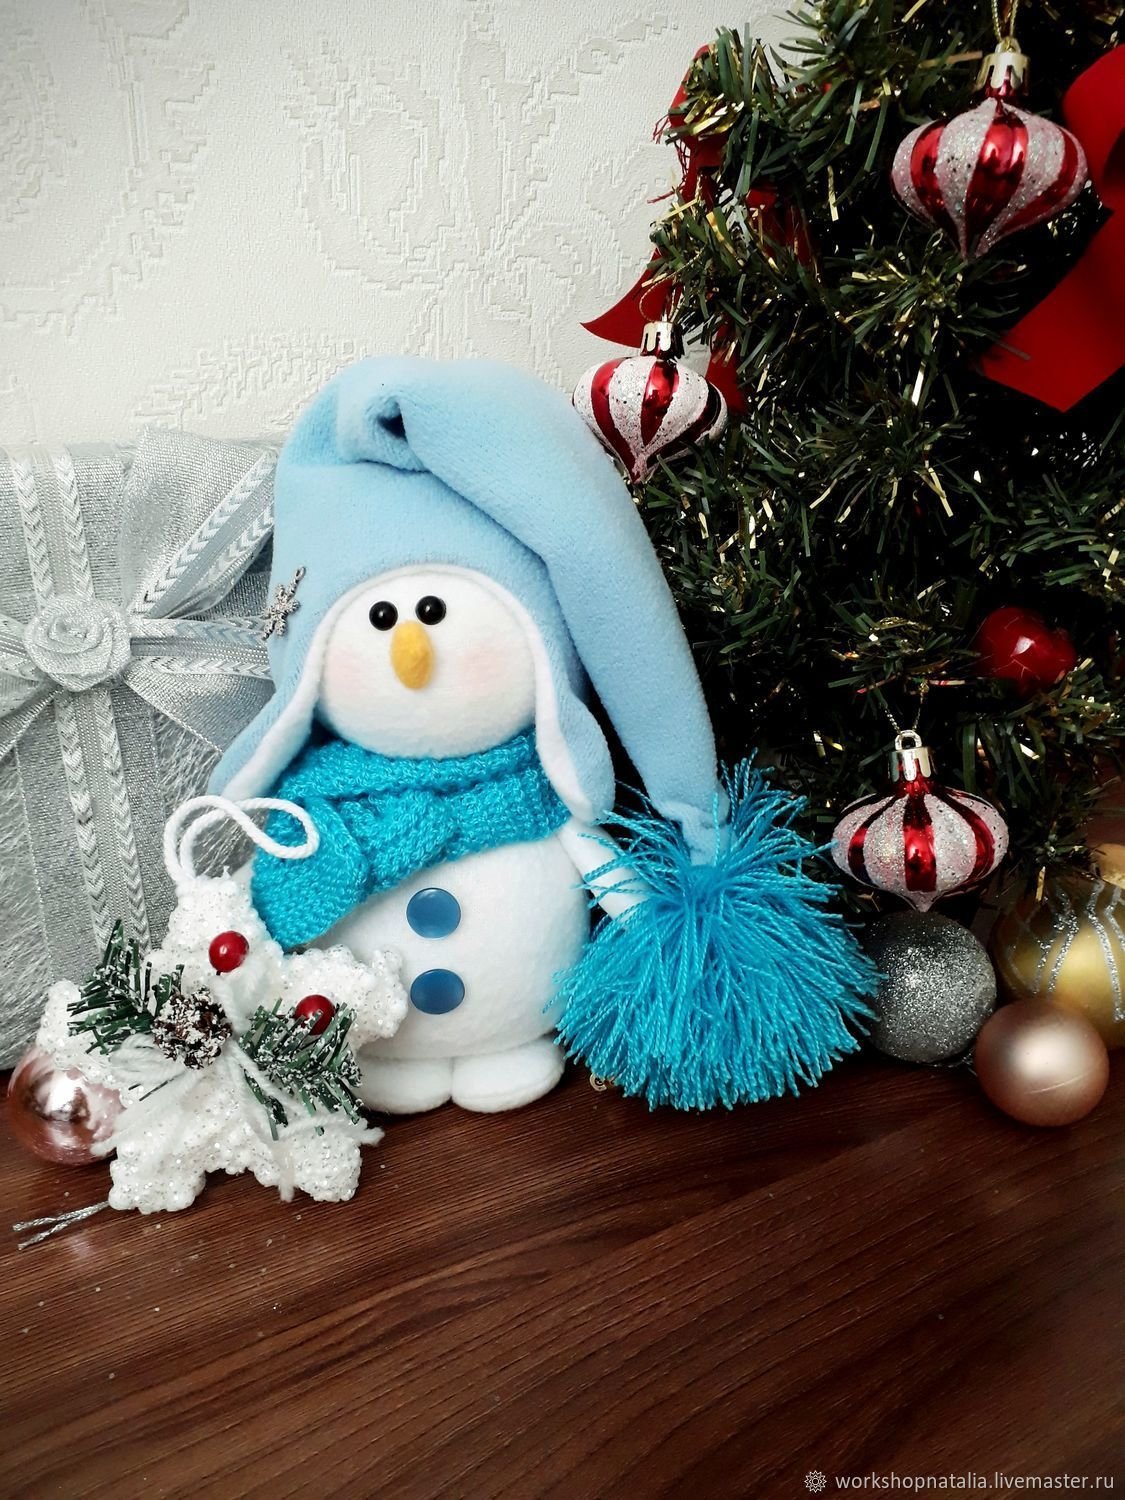 Елкий. Игрушки под елку. Новогодние игрушки под елку. Снеговик под елку. Игрушка - Снеговик.